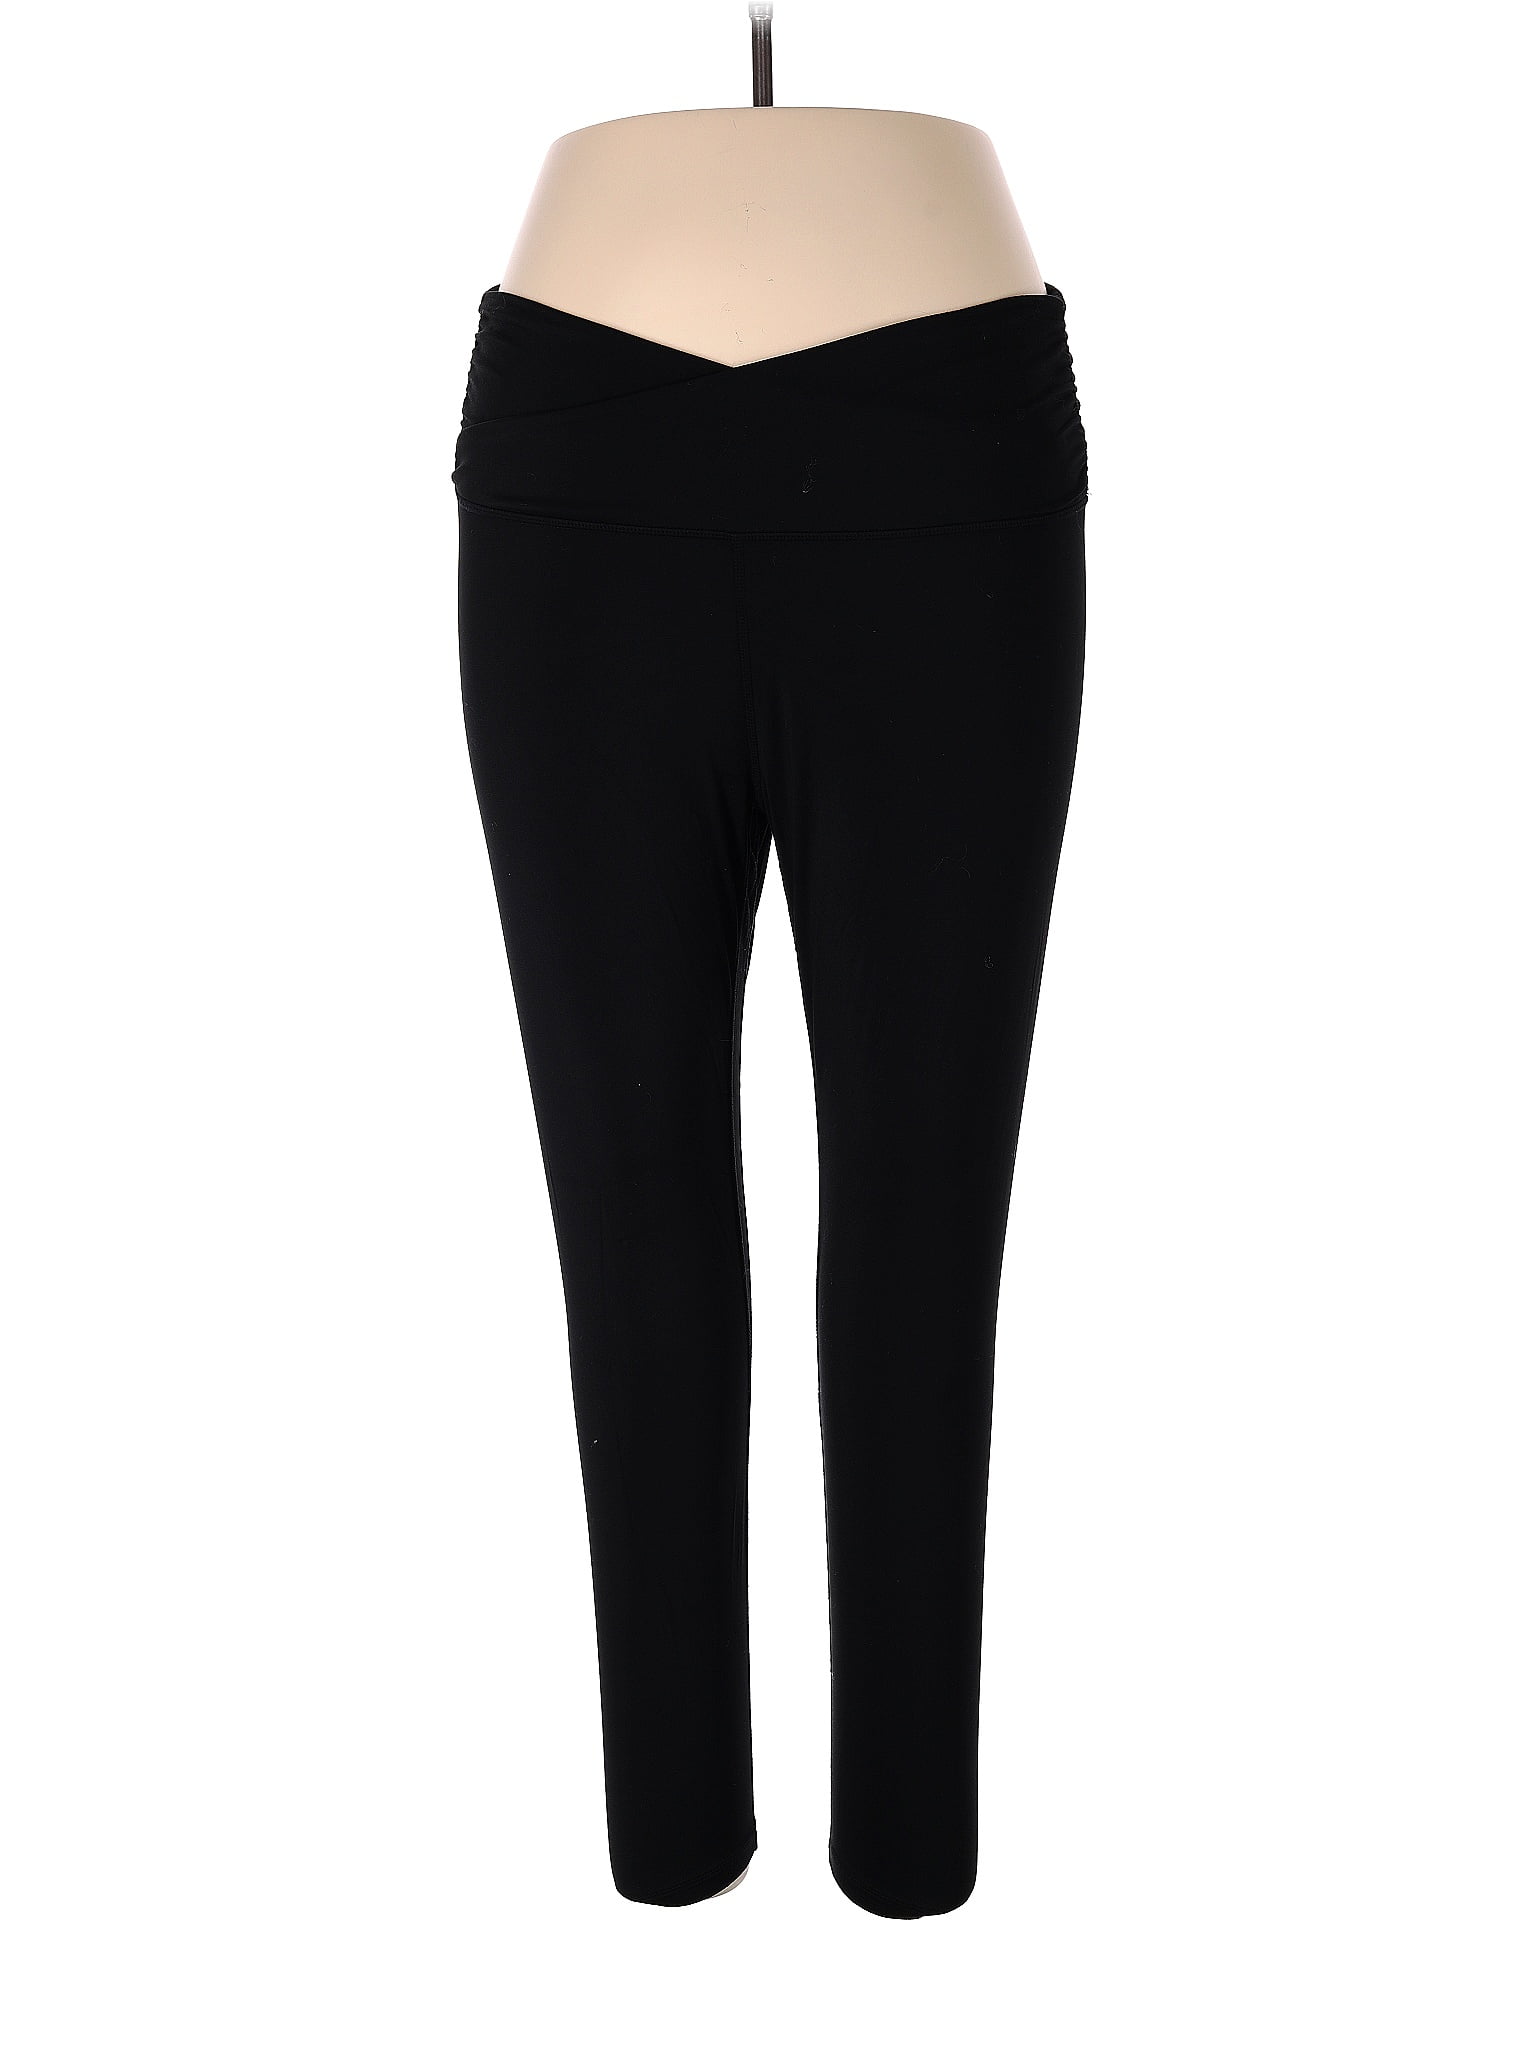 Ododos women's black leggings size S